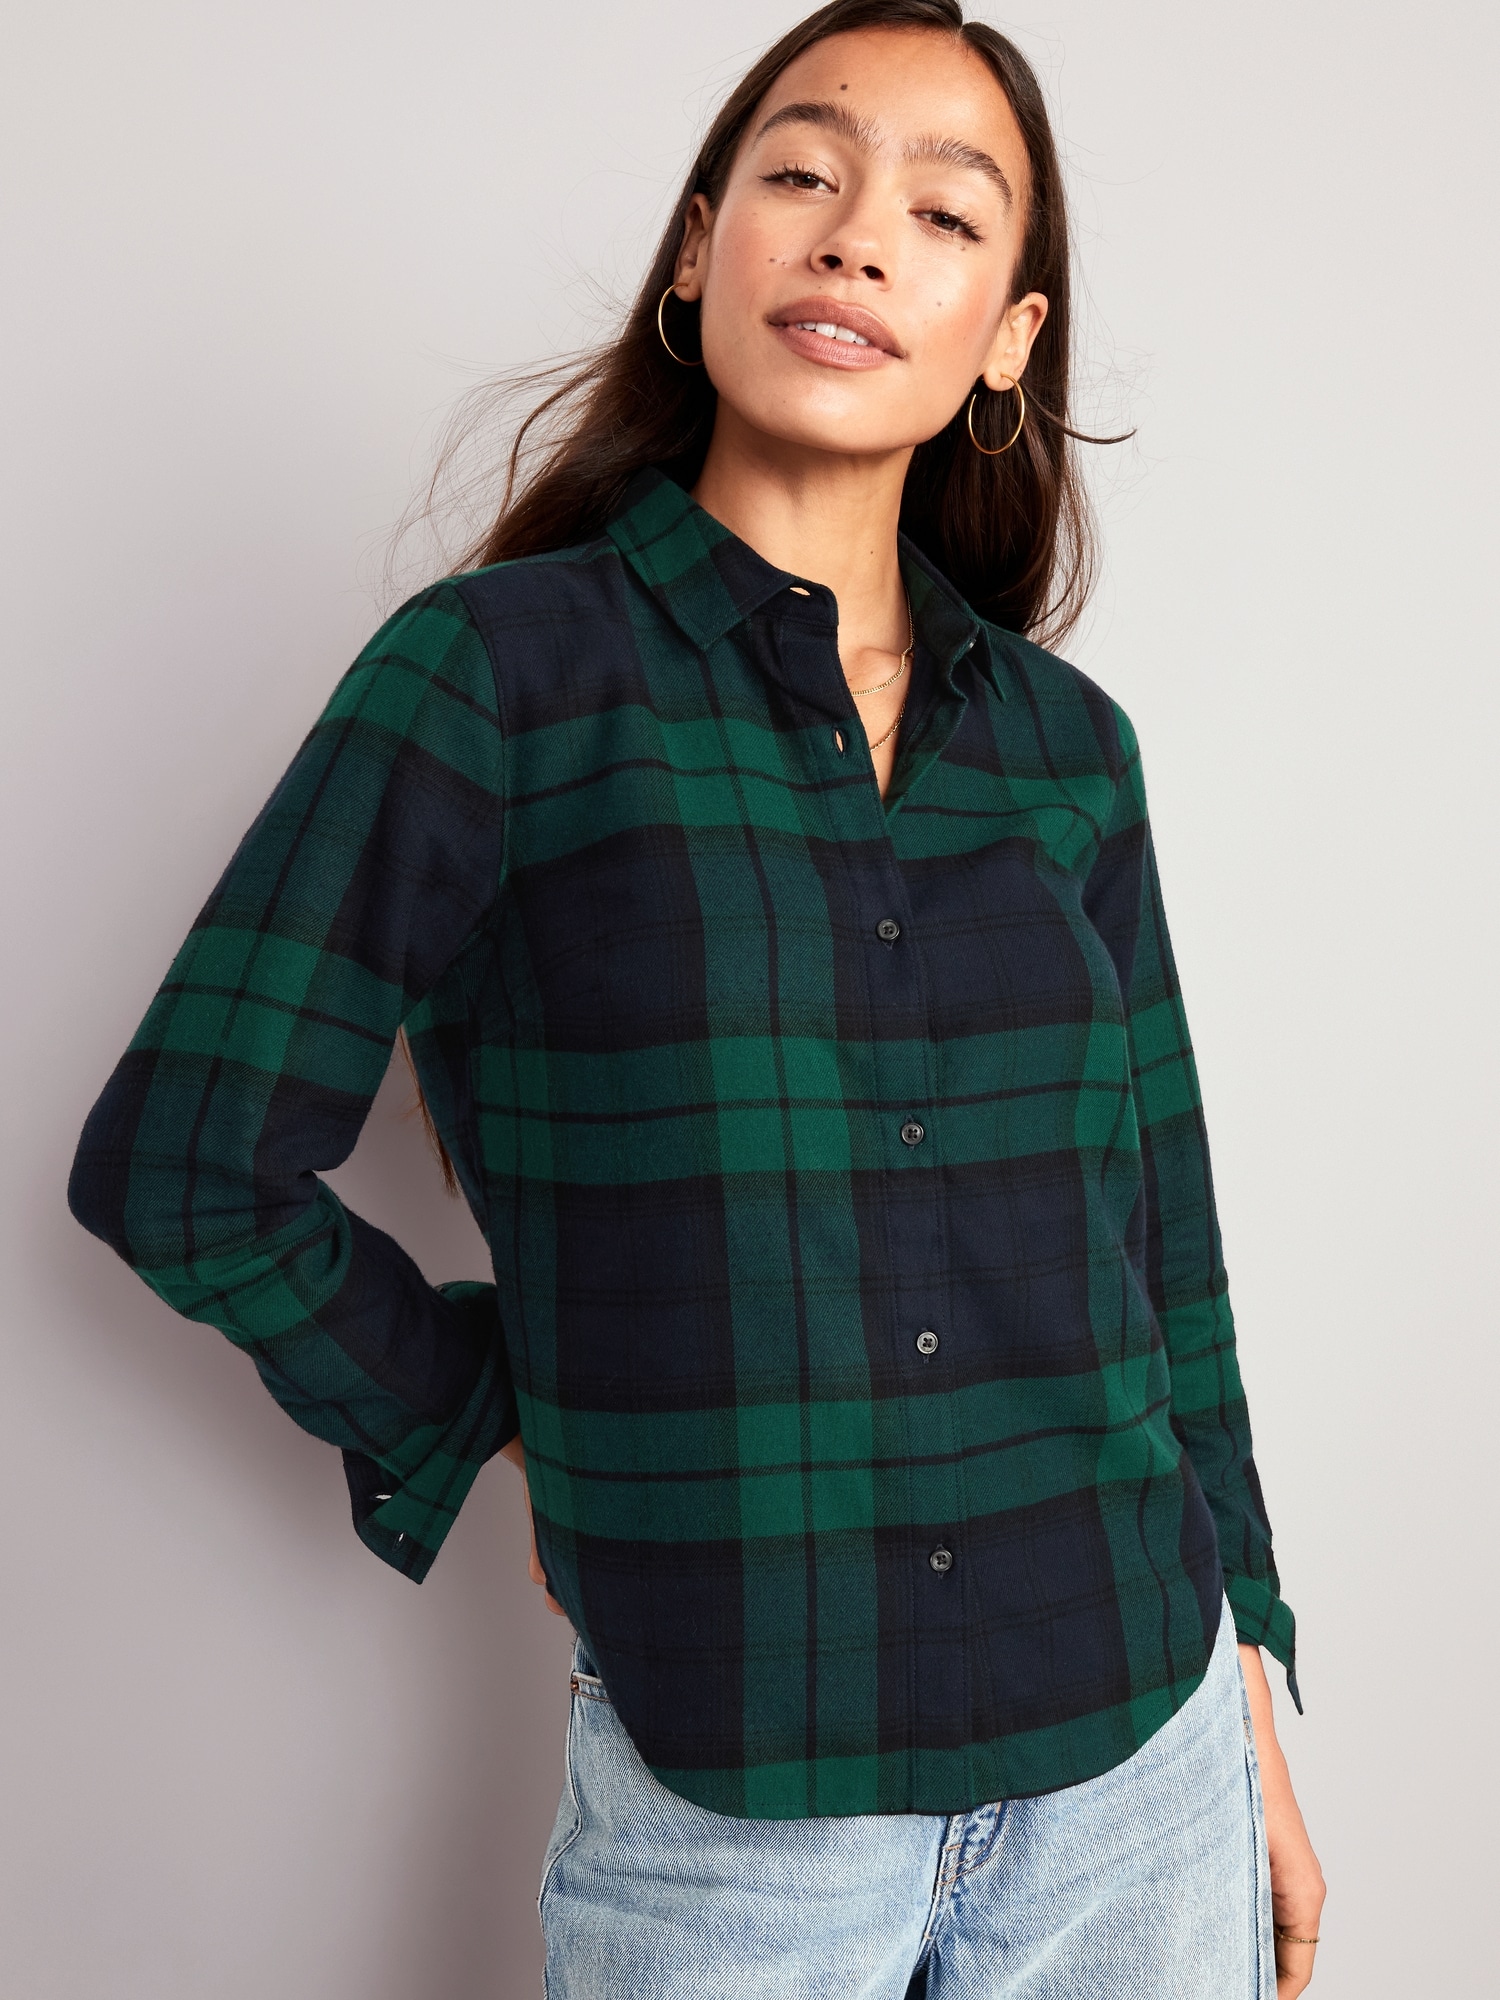 Fashion Woman Loose Fit Long Blouses XL-5XL Plaid Shirt Checkered